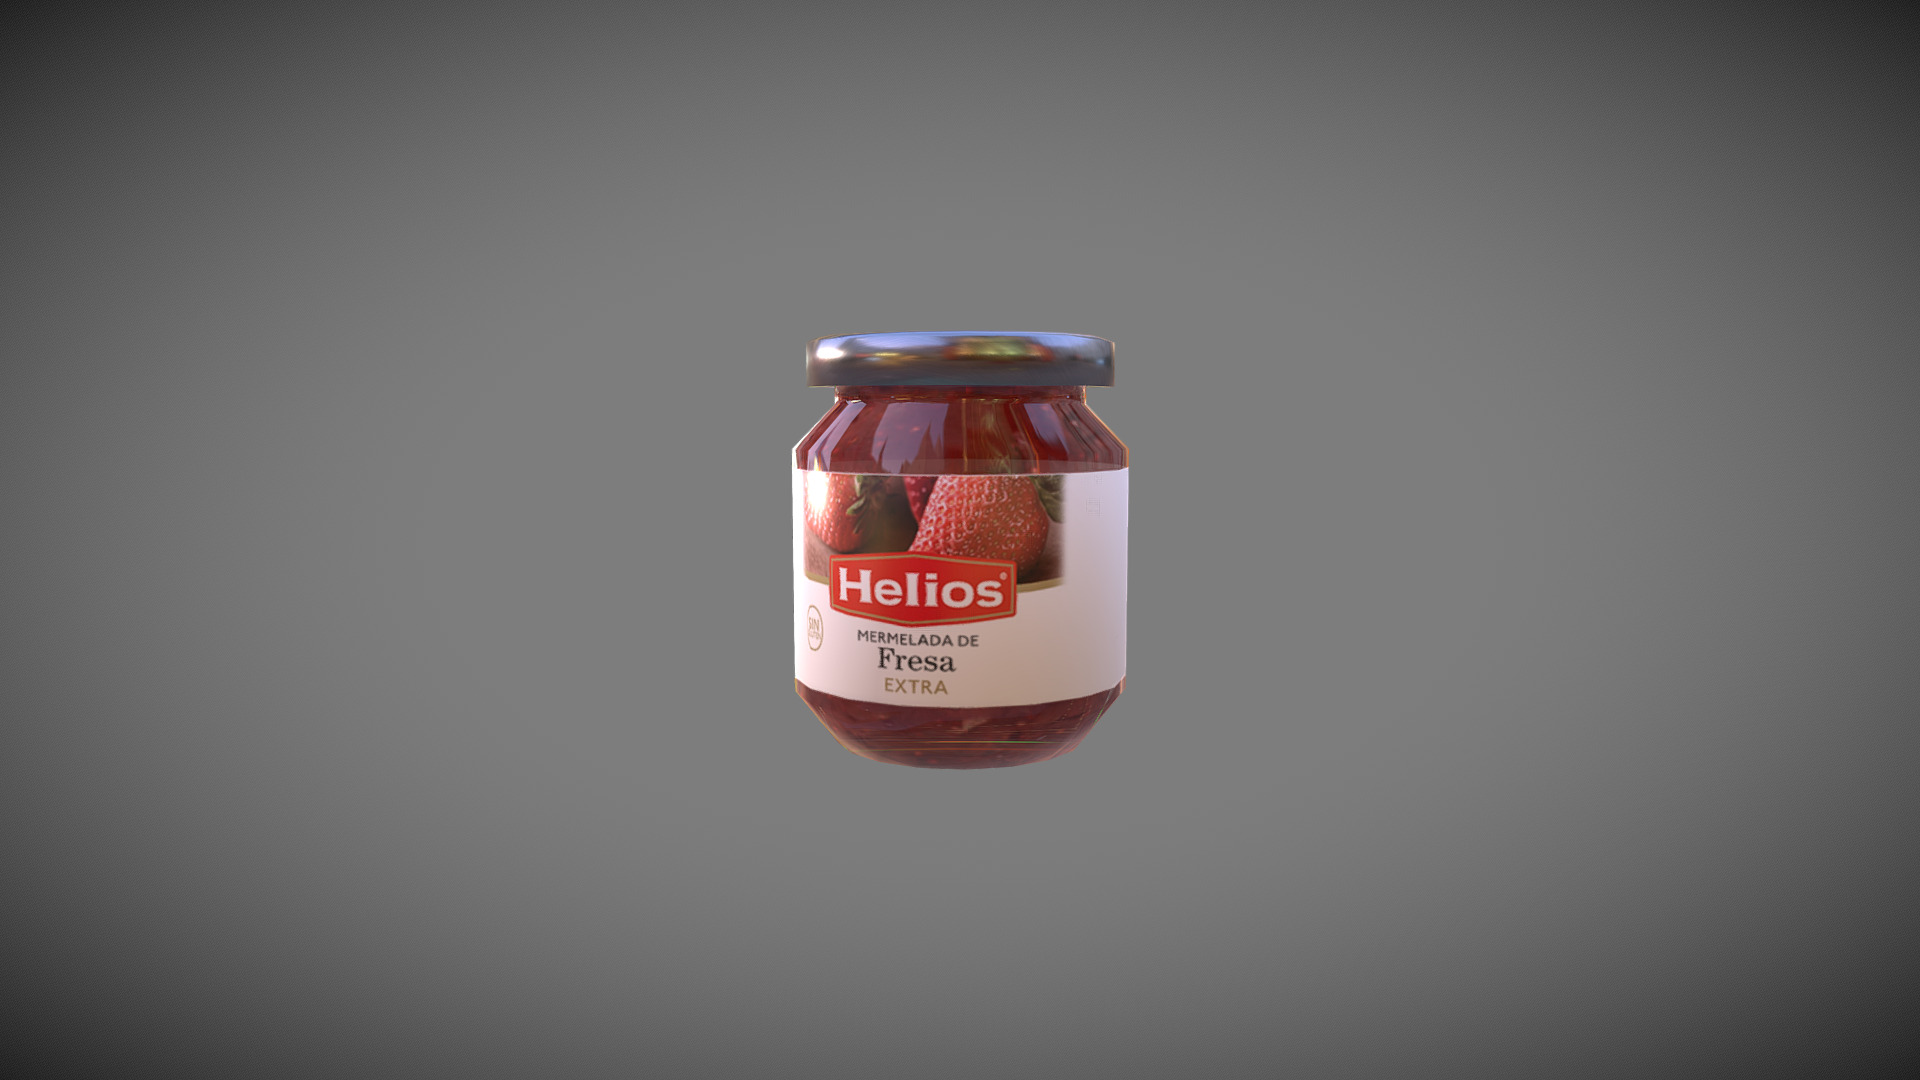 3D model Mermelada Fresa Helios - This is a 3D model of the Mermelada Fresa Helios. The 3D model is about a jar of food.